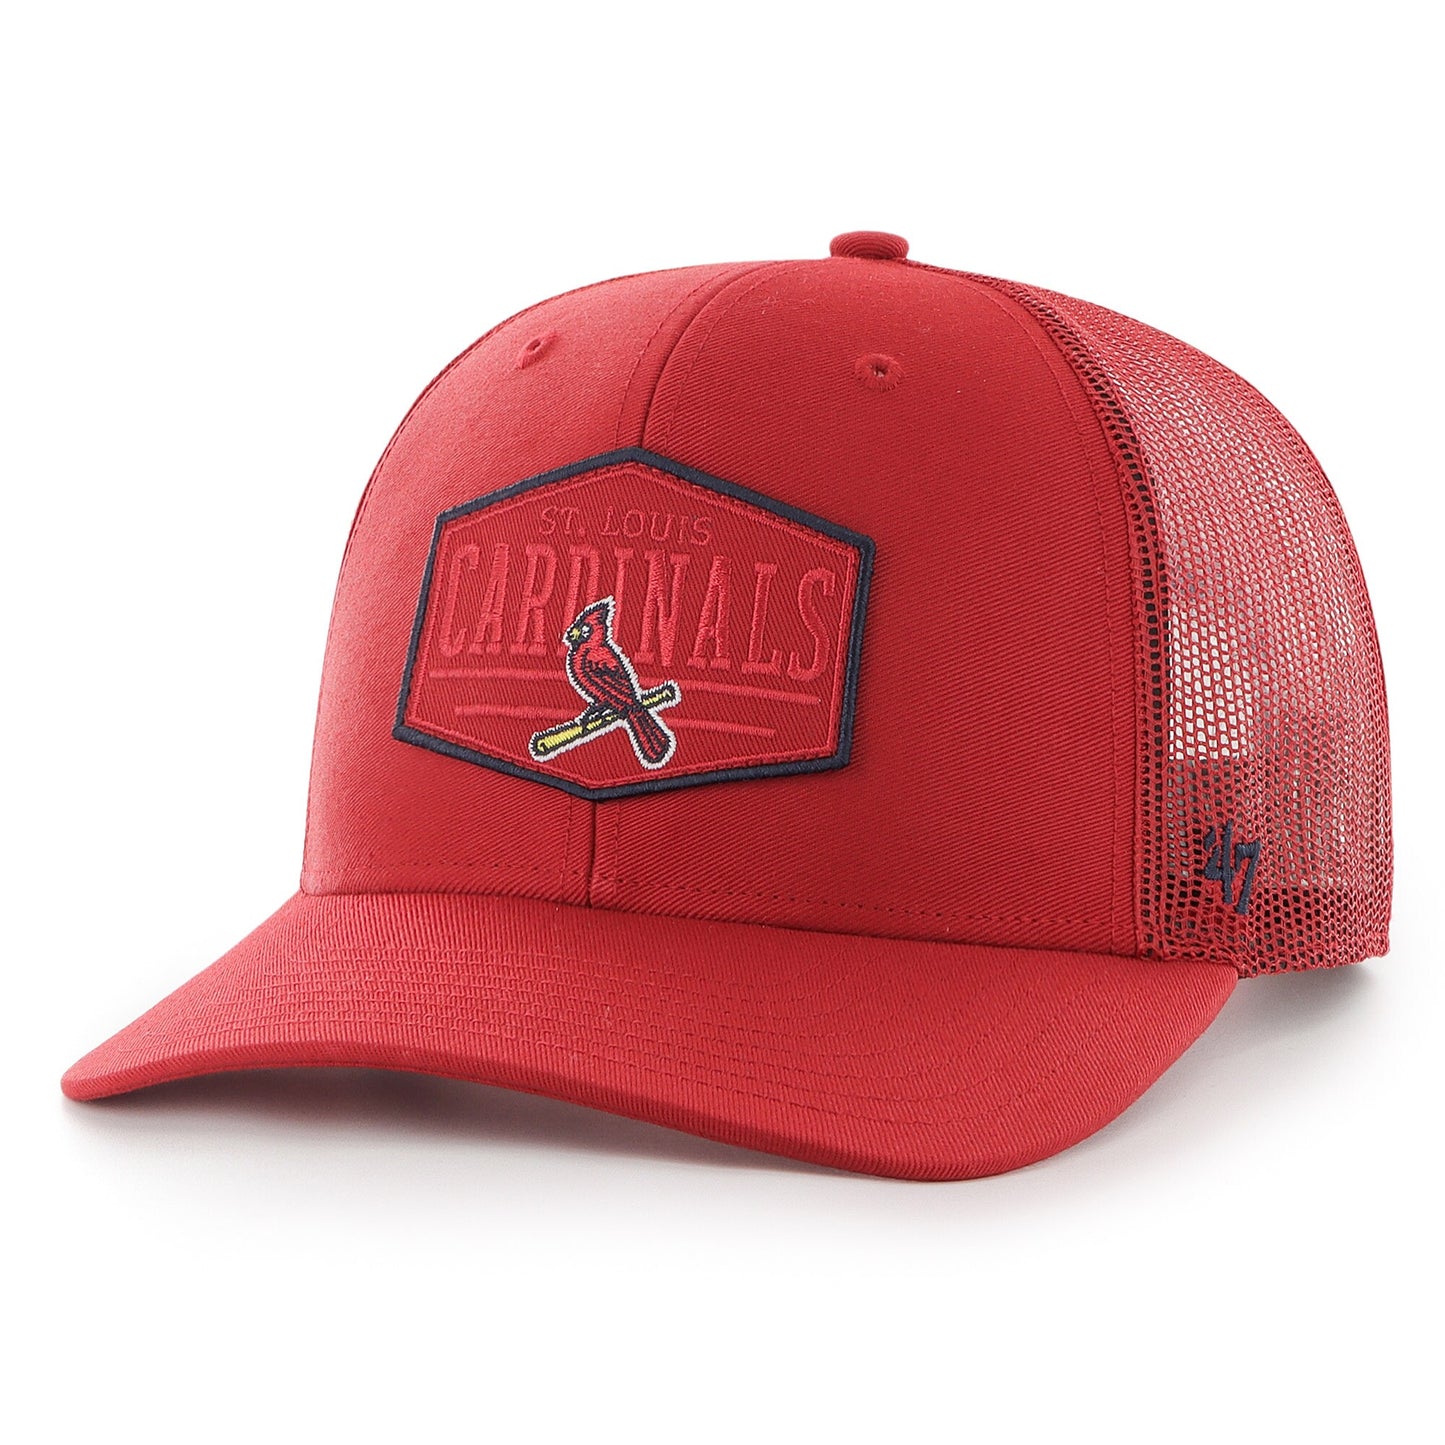 St. Louis Cardinals '47 Ridgeline Tonal Patch Trucker Adjustable Hat - Red